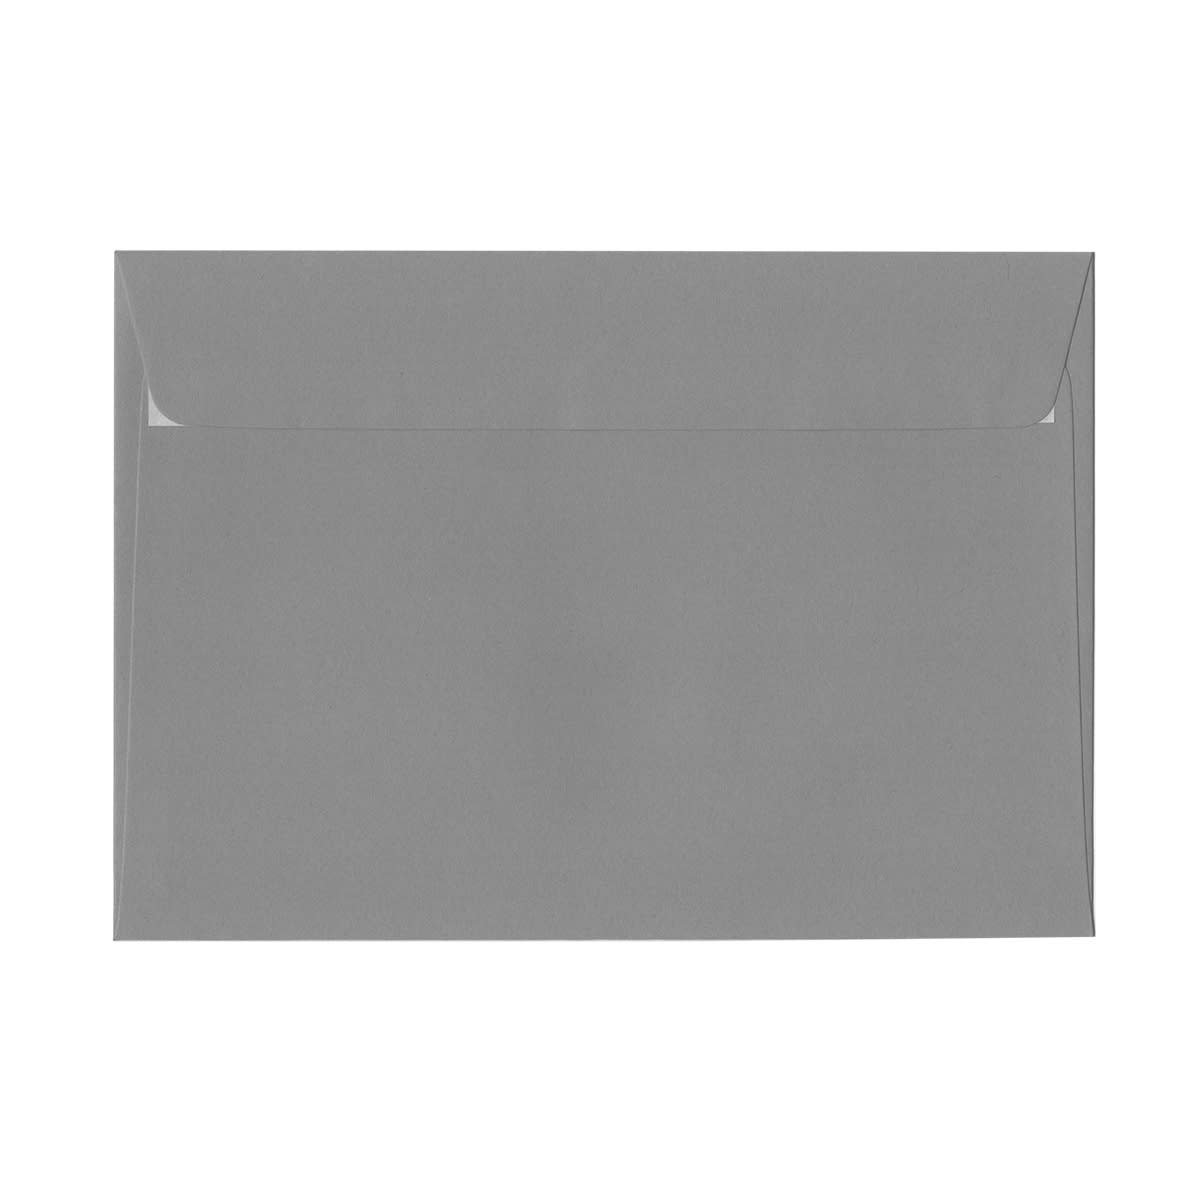 C6 Dark Grey Peel and Seal Envelopes 120gsm